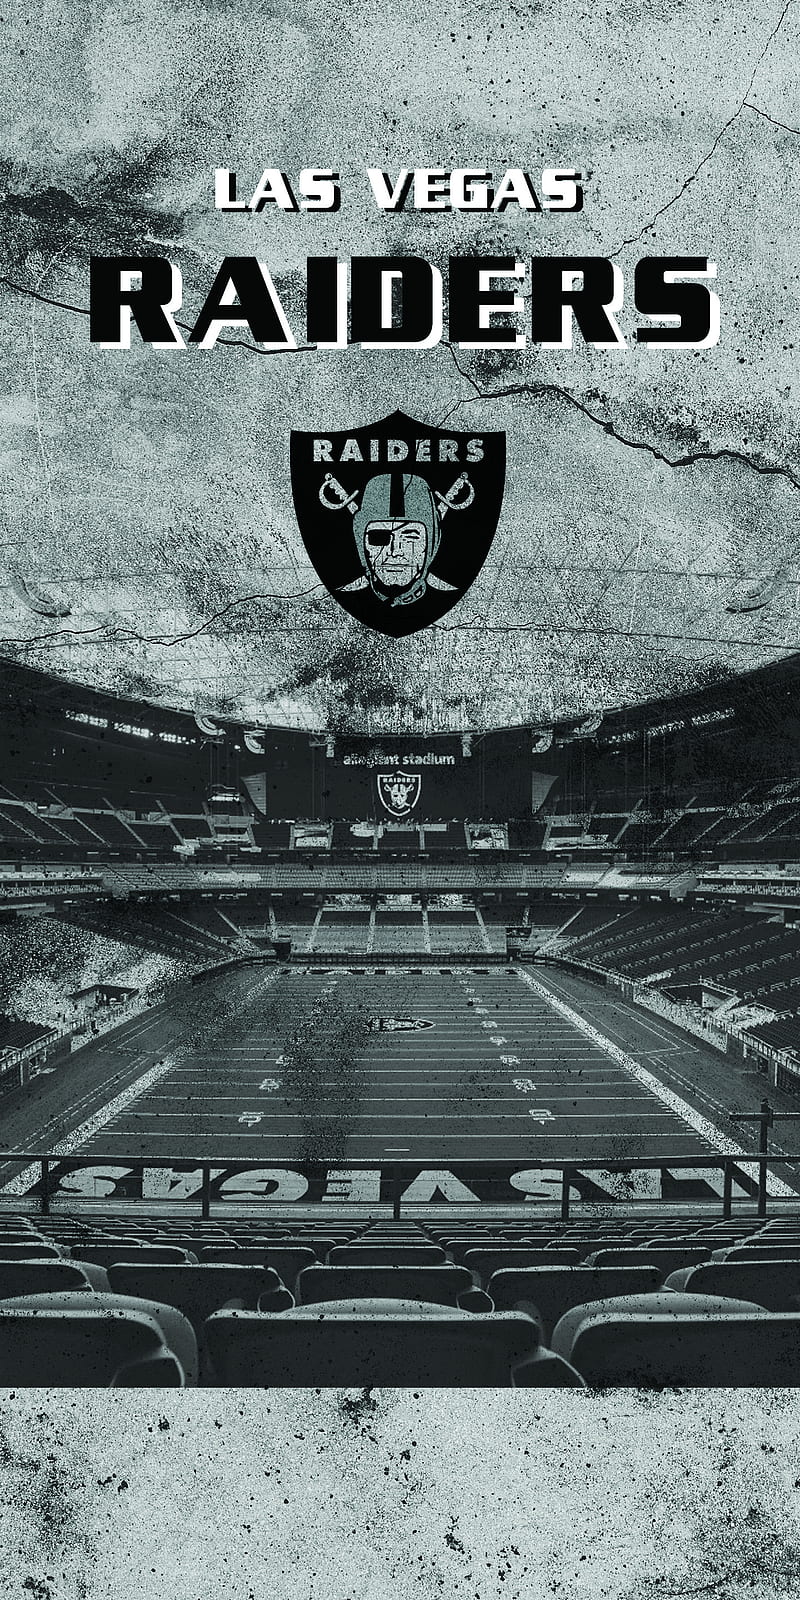 Wallpapers  Las Vegas Raiders  Raiderscom